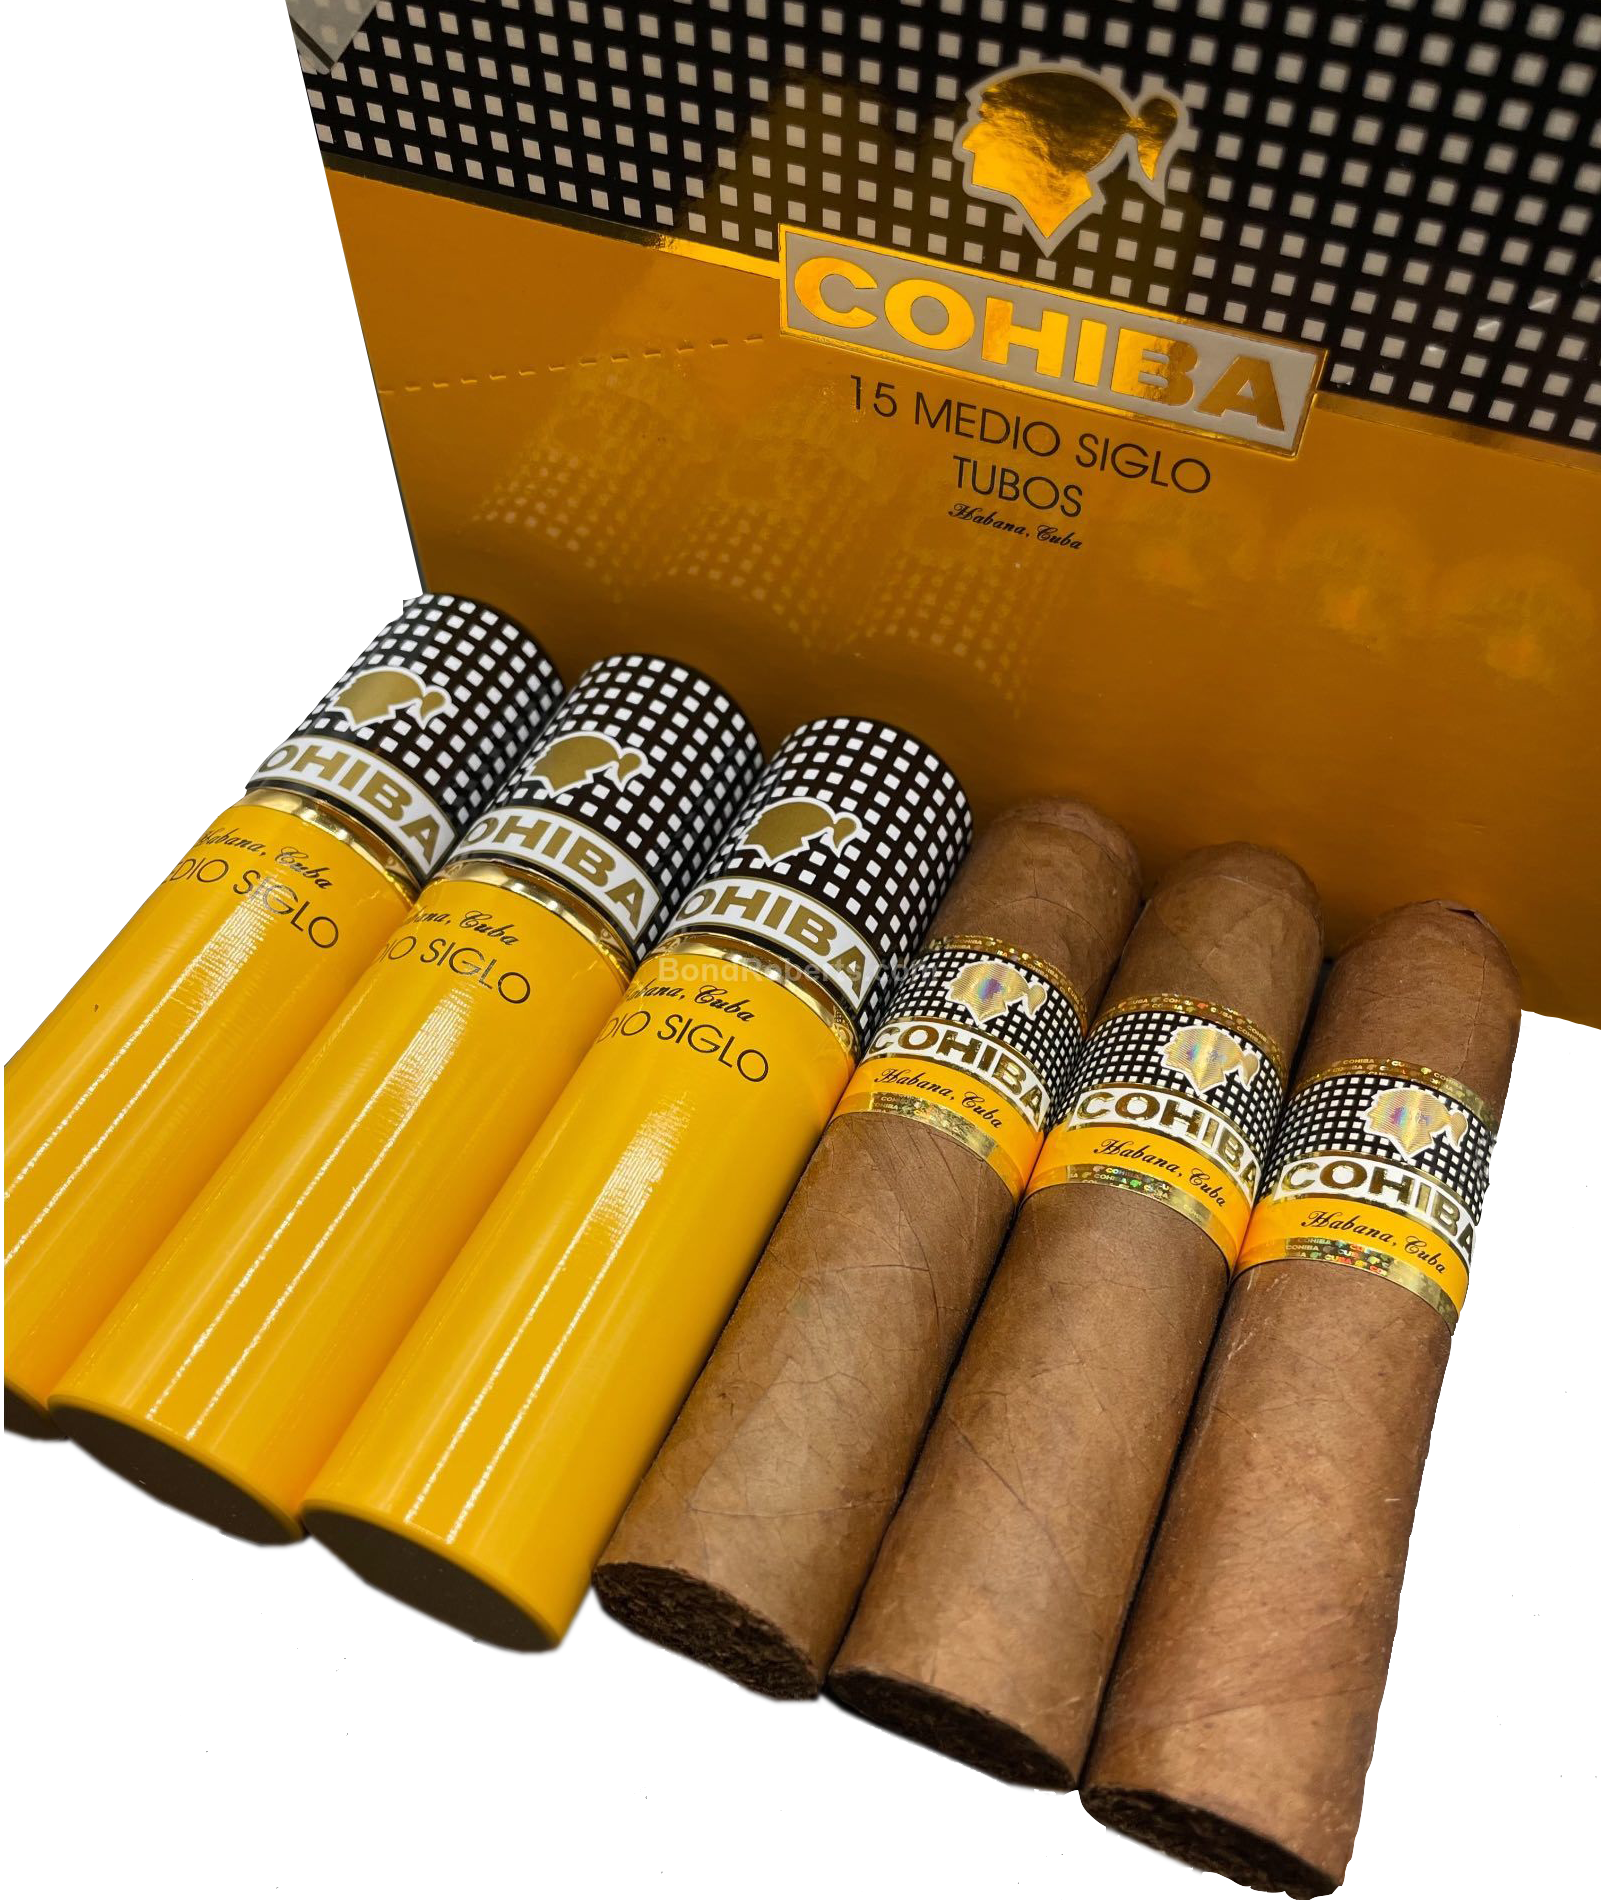 COHIBA MEDIO SIGLO A/T 15 Cigars (5 packs of 3 Cigars)